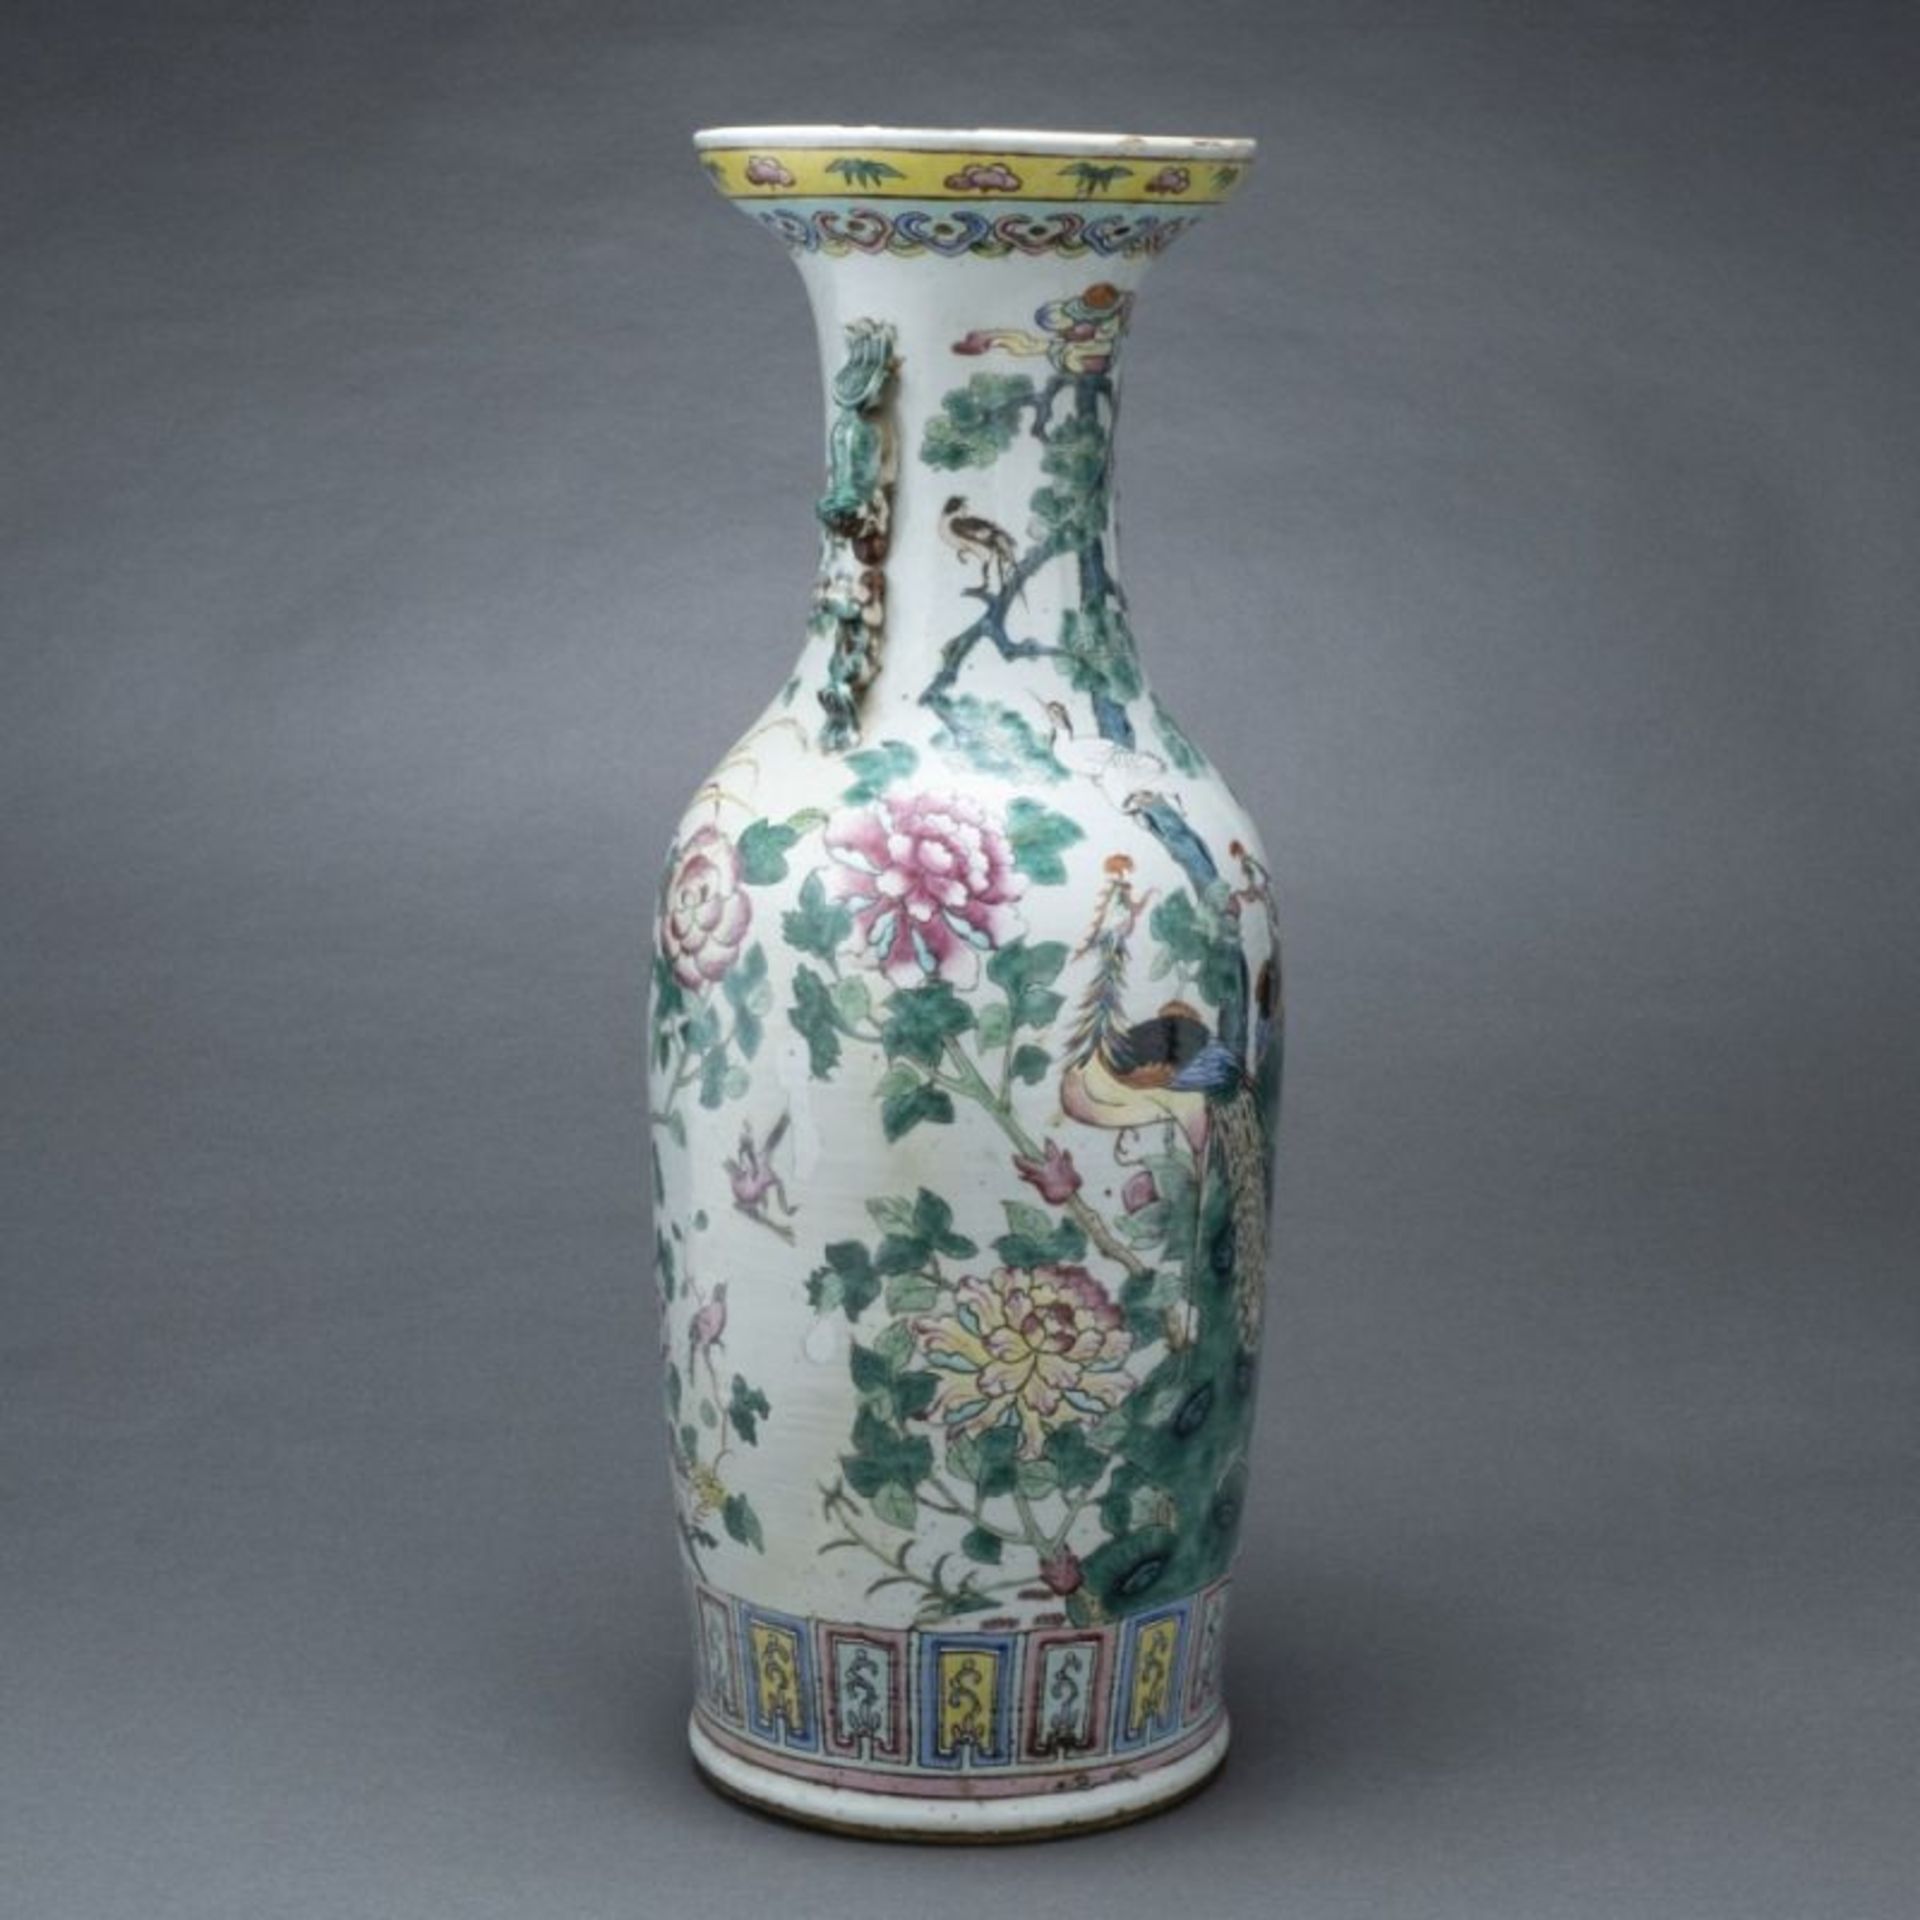 Famille rose-Bodenvase, China, Qing-Dynastie, wohl um 1800 - Bild 2 aus 2